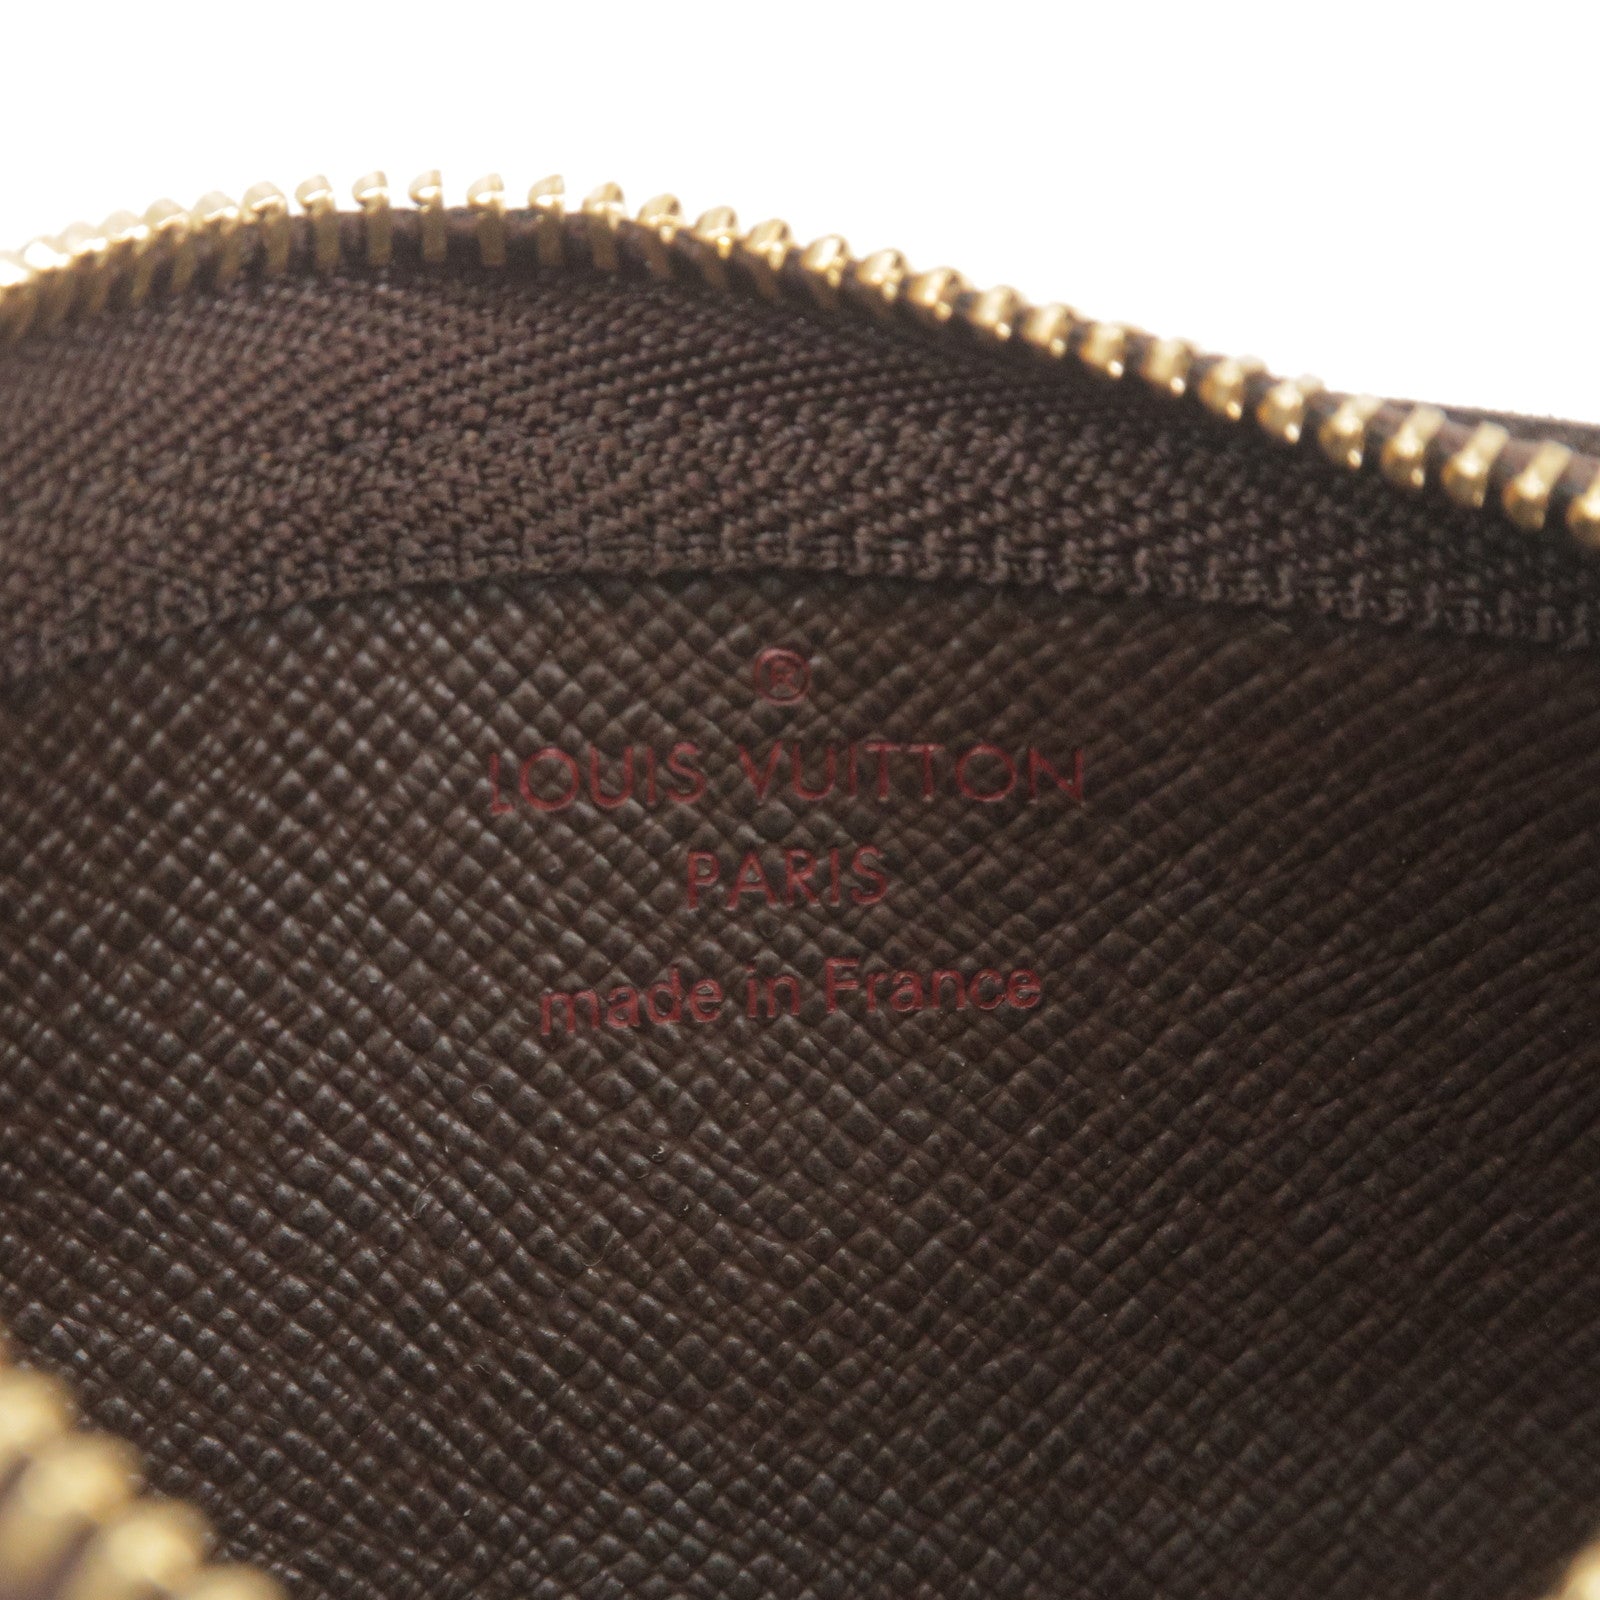 Louis Vuitton Key Porte-Cles Zip Pouch in Damier Ebene - SOLD